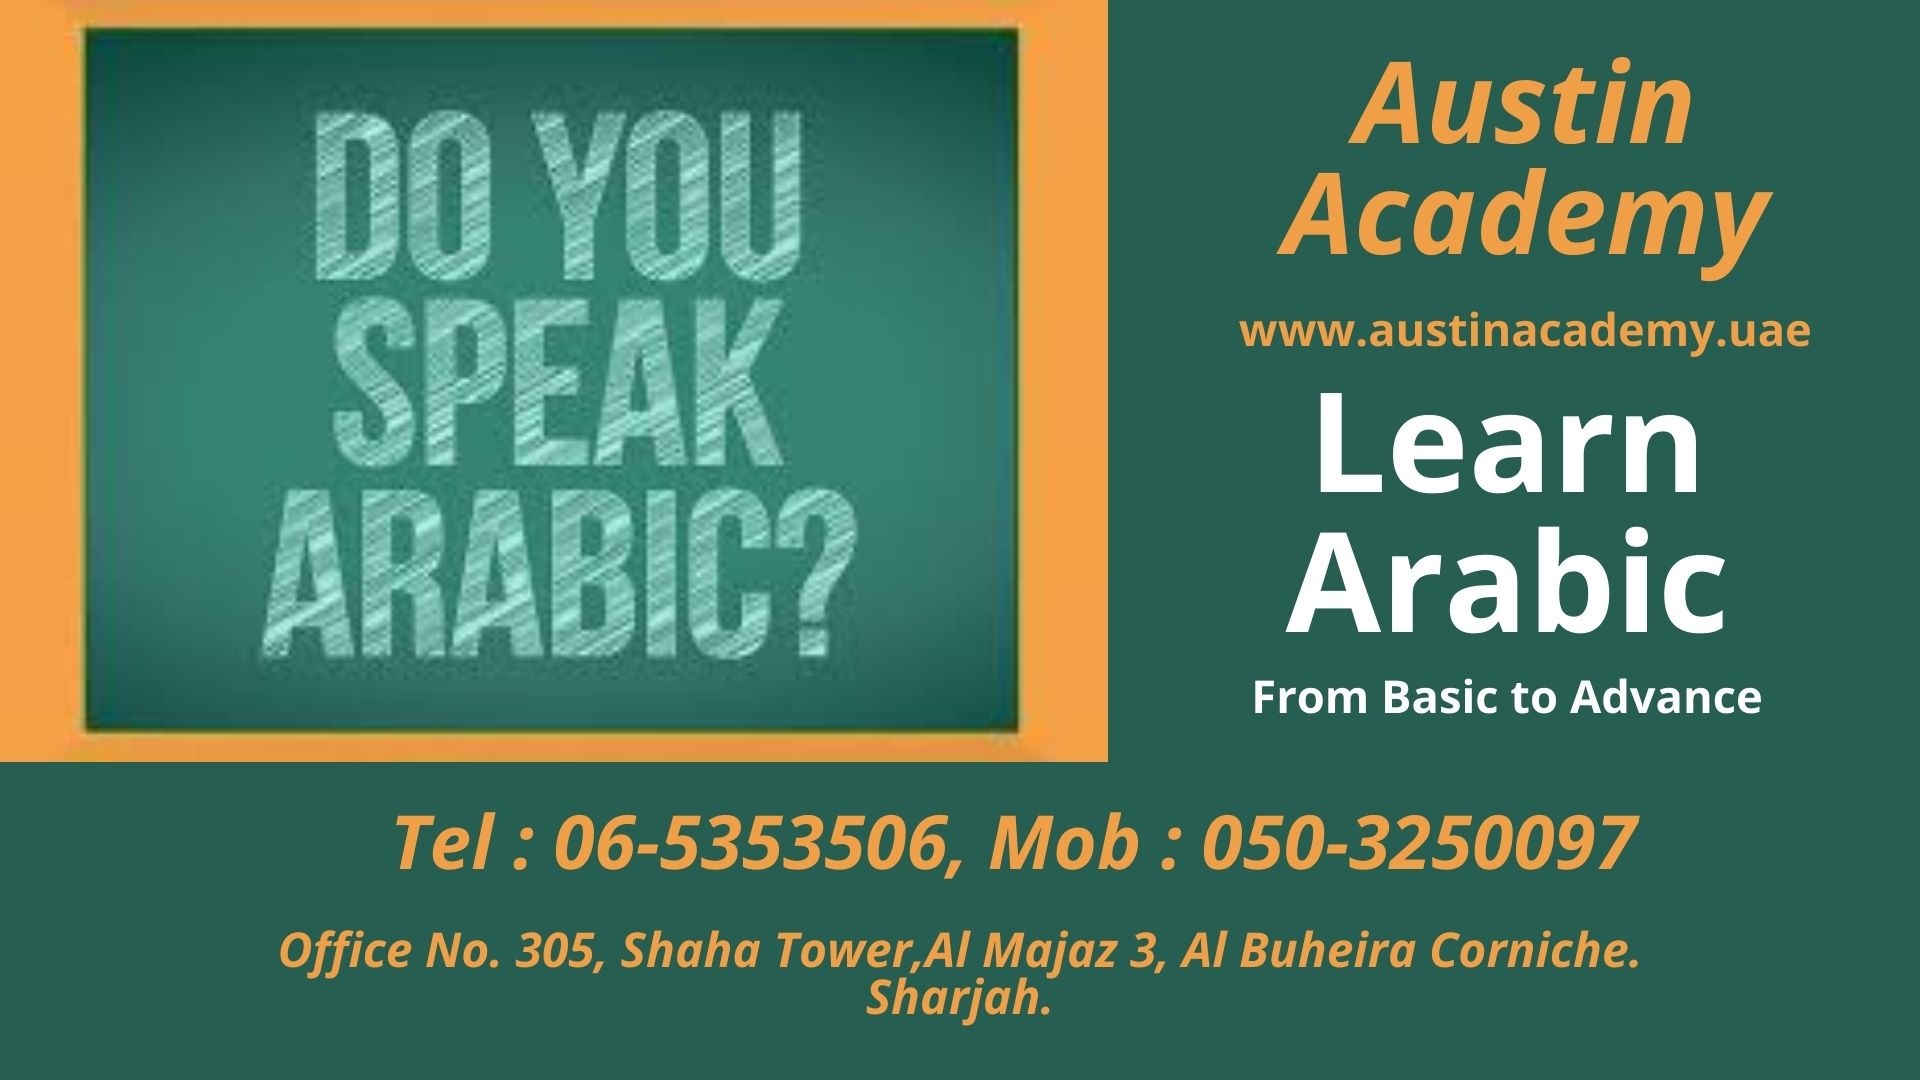 Spoken Arabic Classes in Sharjah New Year Offer Call 0503250097